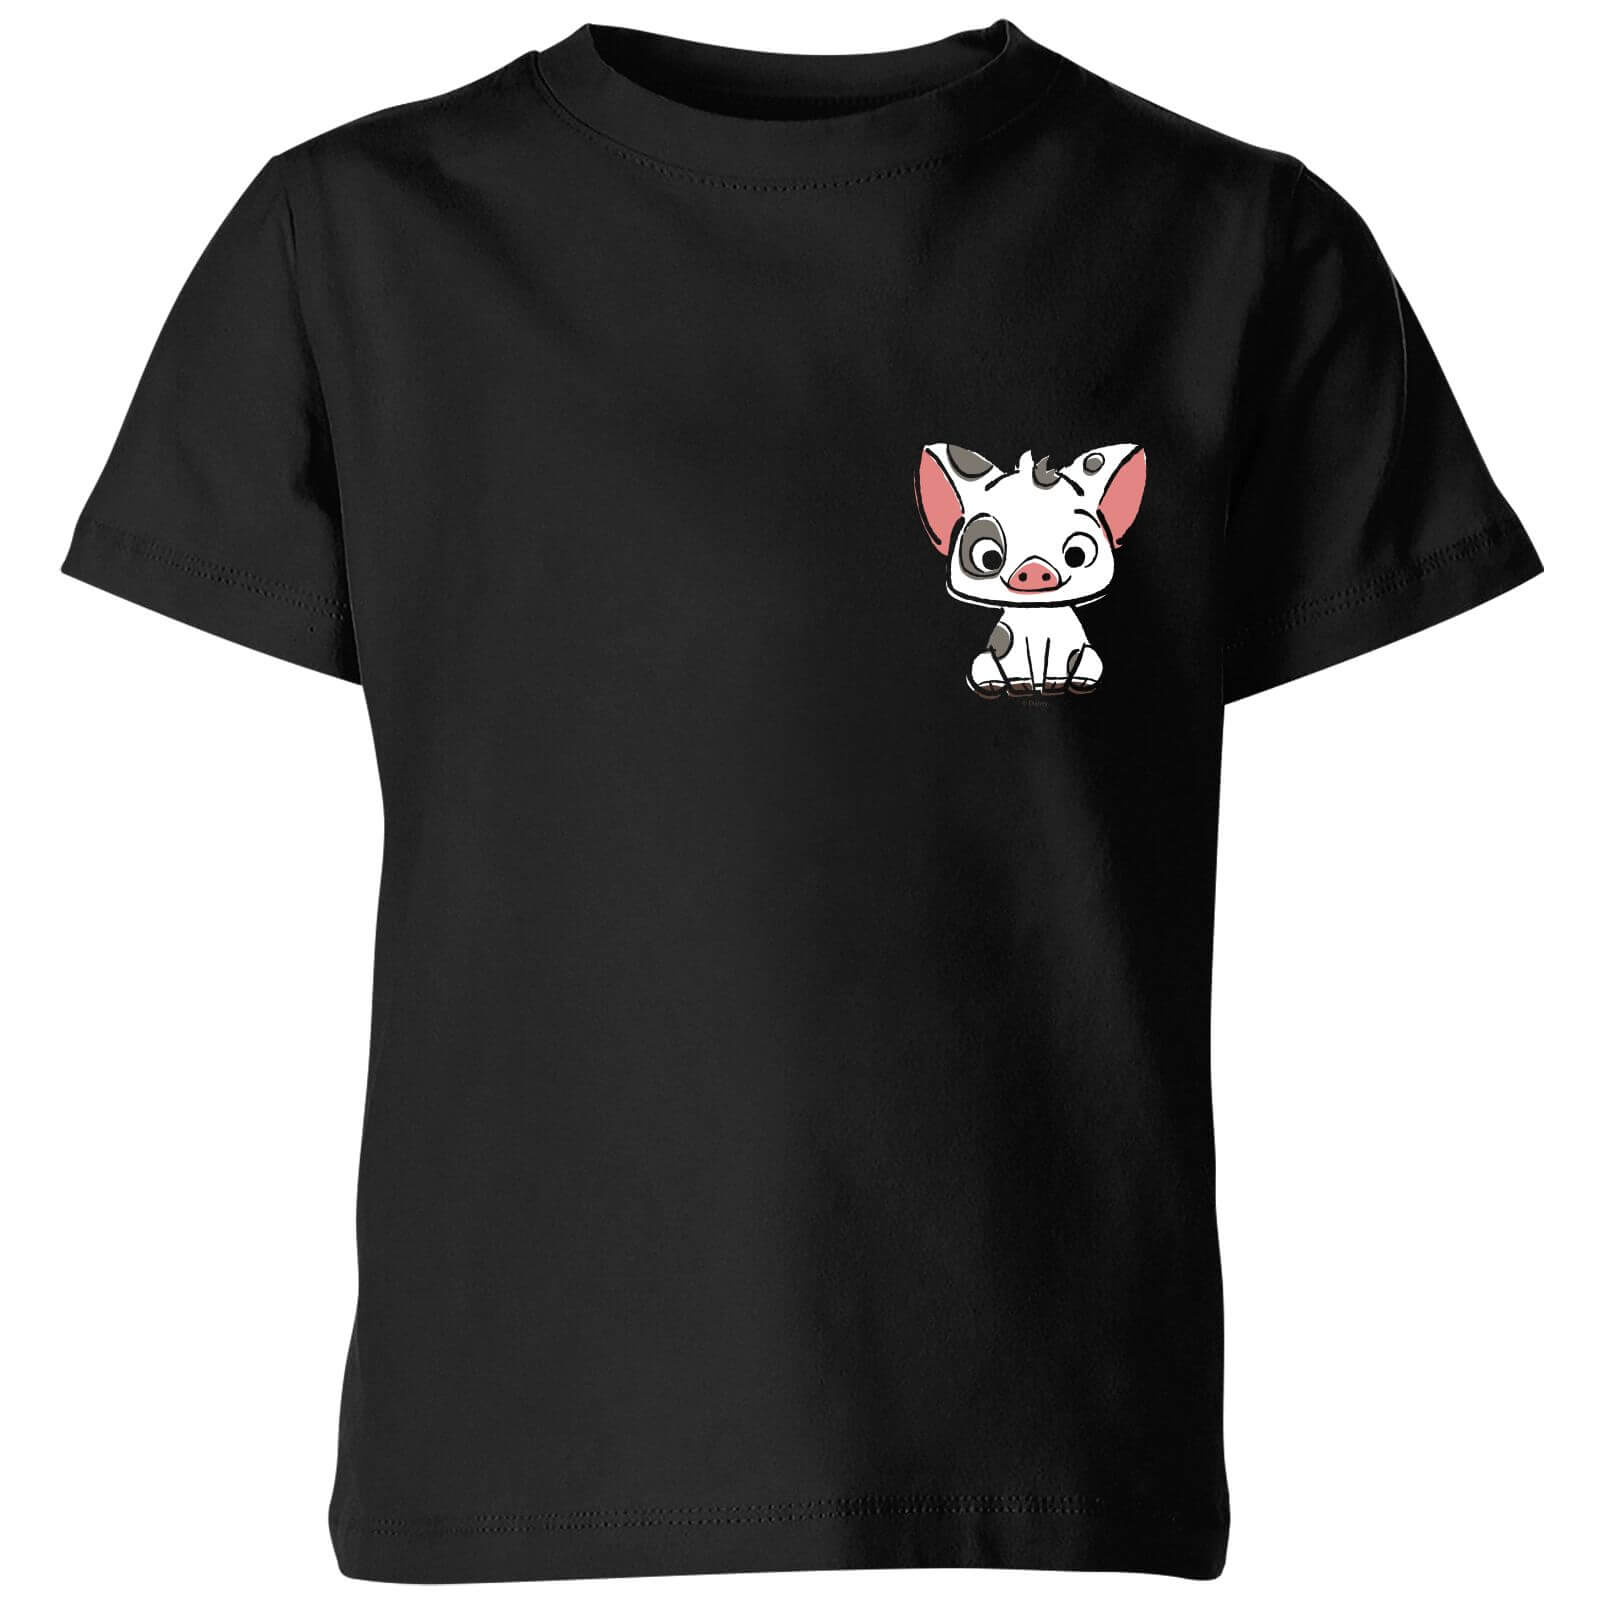 Disney Moana Pua The Pig Kids' T-Shirt - Black - 9-10 Years - Black